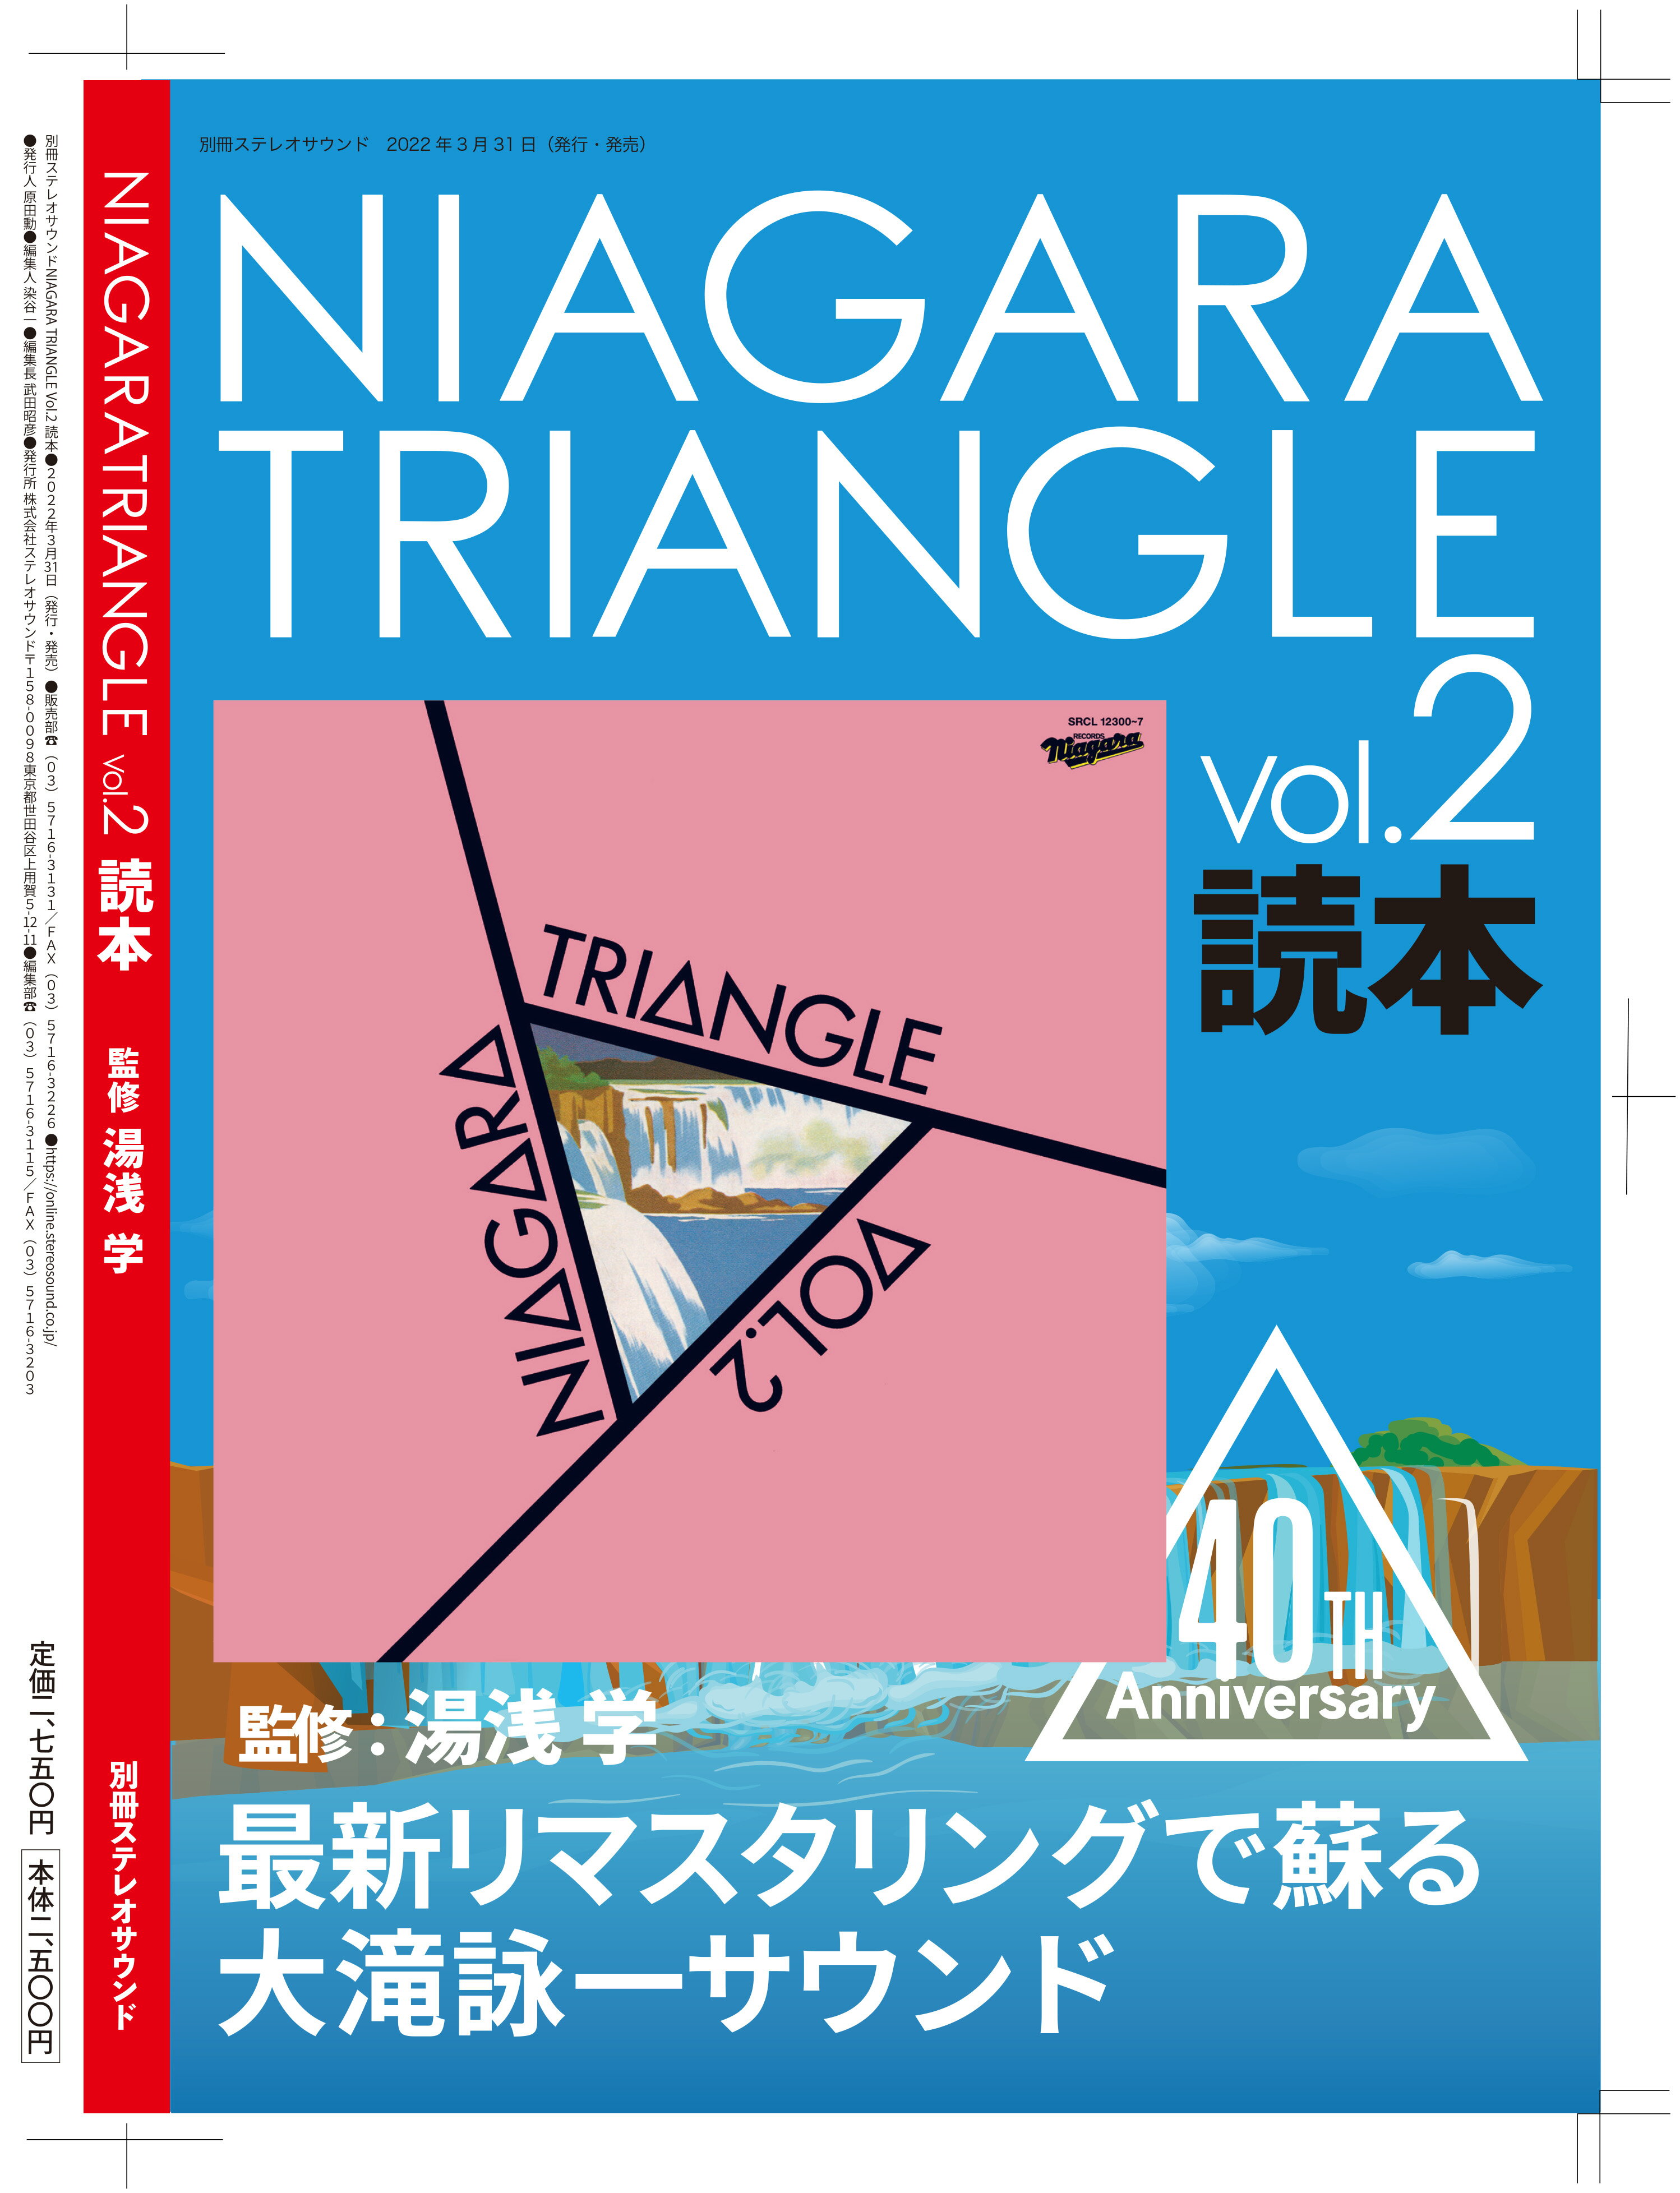 Niagara triangle vol 2